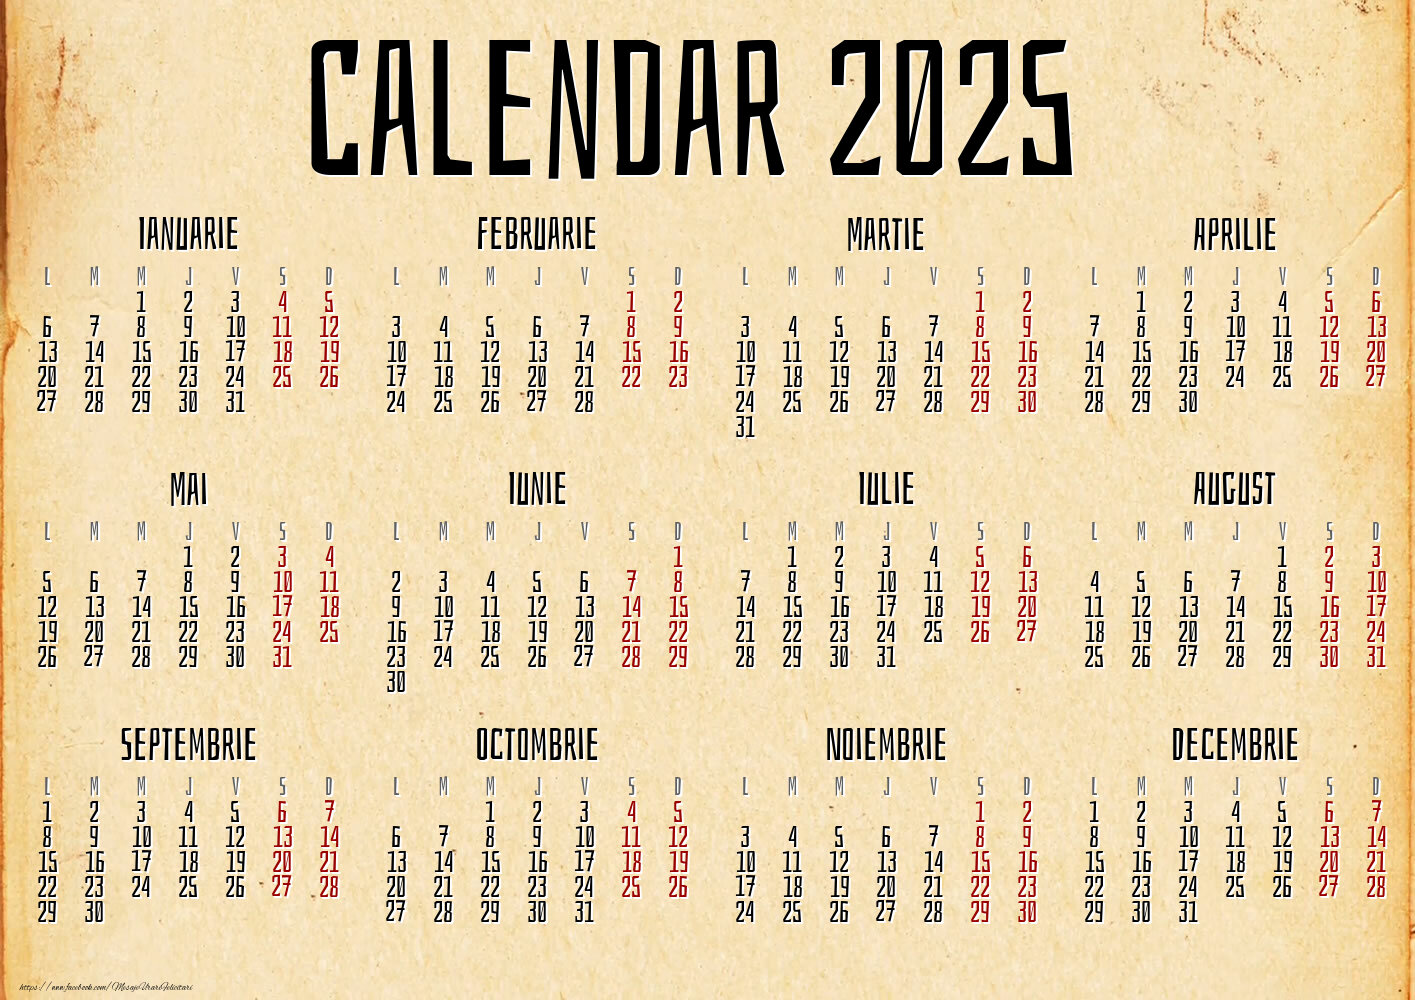 Calendare Calendar 2025 - Vintage Paper - Model 0048